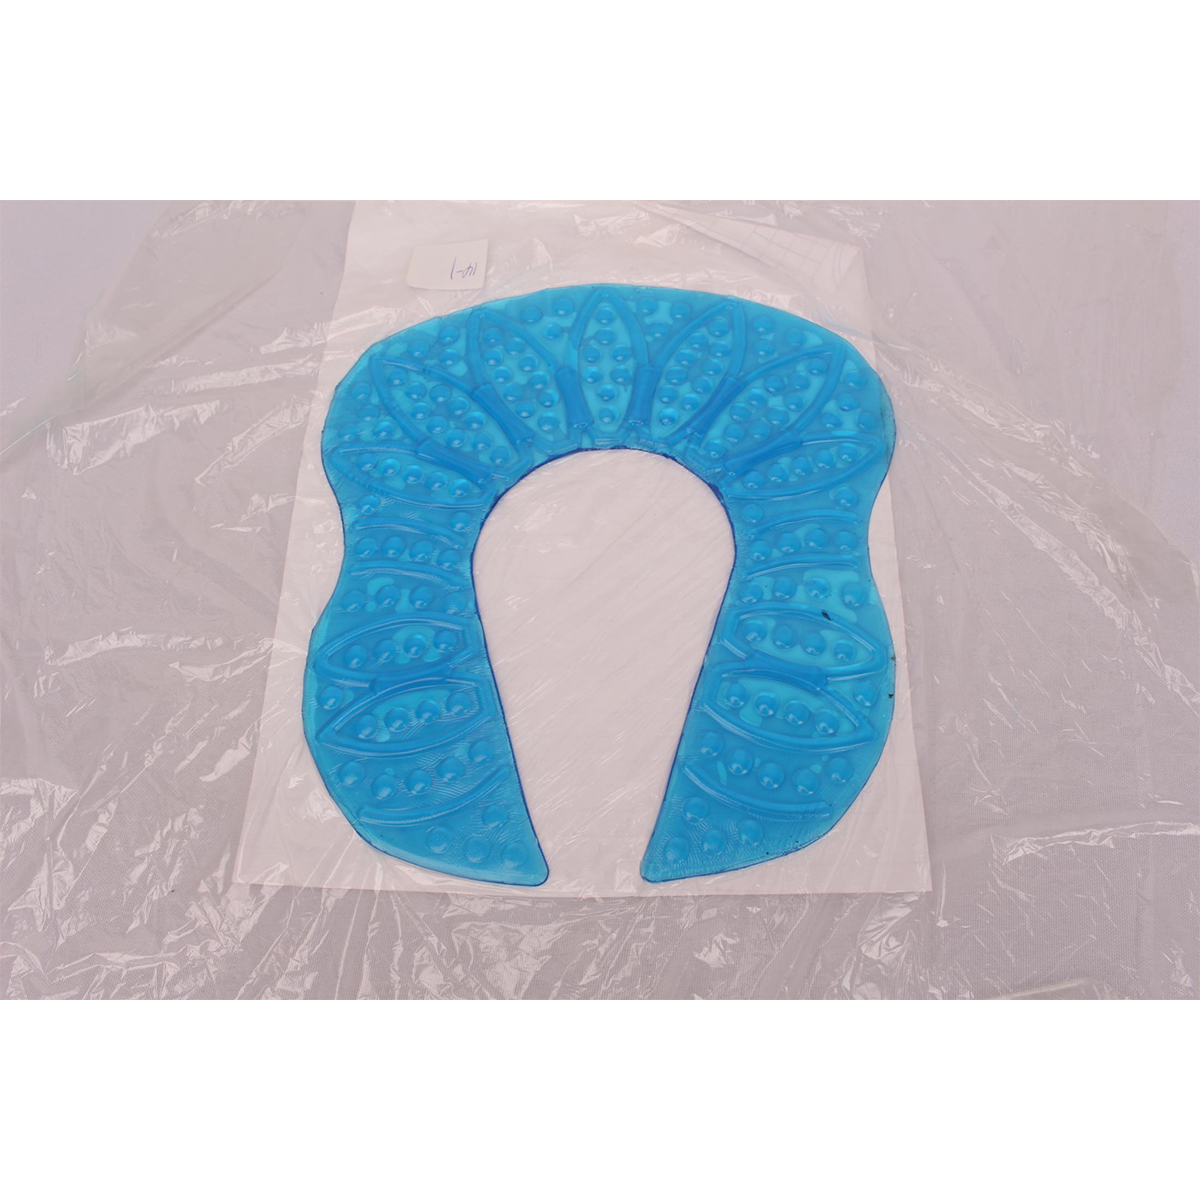 U-shaped Gel Pad Rau Slow Rebound U-shaped Memory Foam Pillow Featured duab